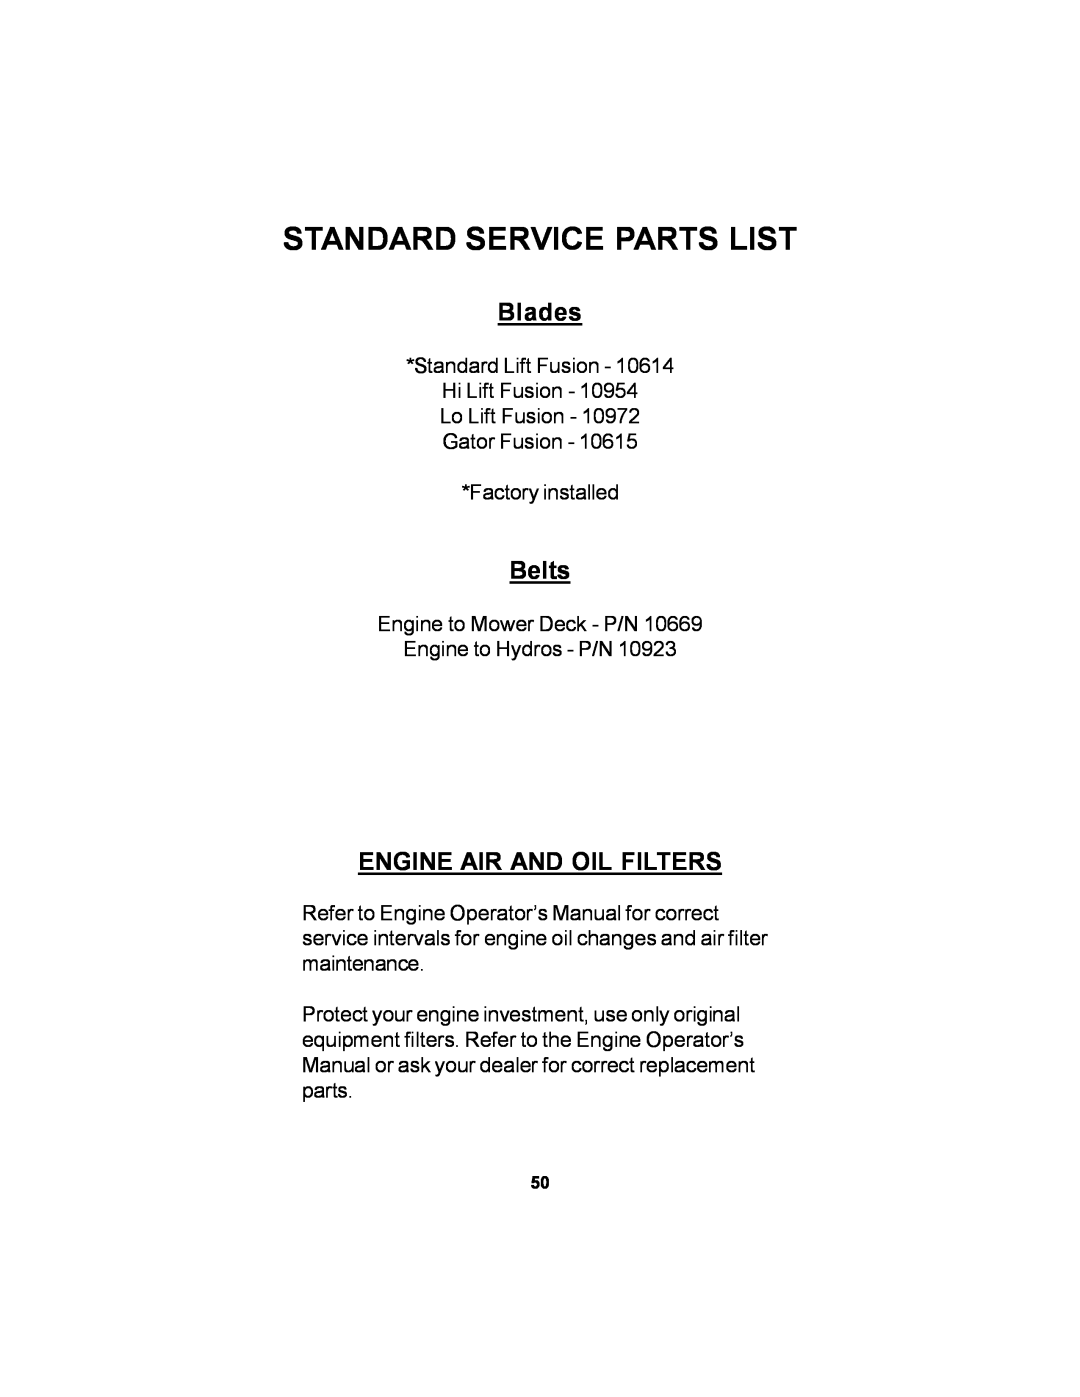 Dixon Black Bear manual Standard Service Parts List, Blades, Belts, Engine Air And Oil Filters 